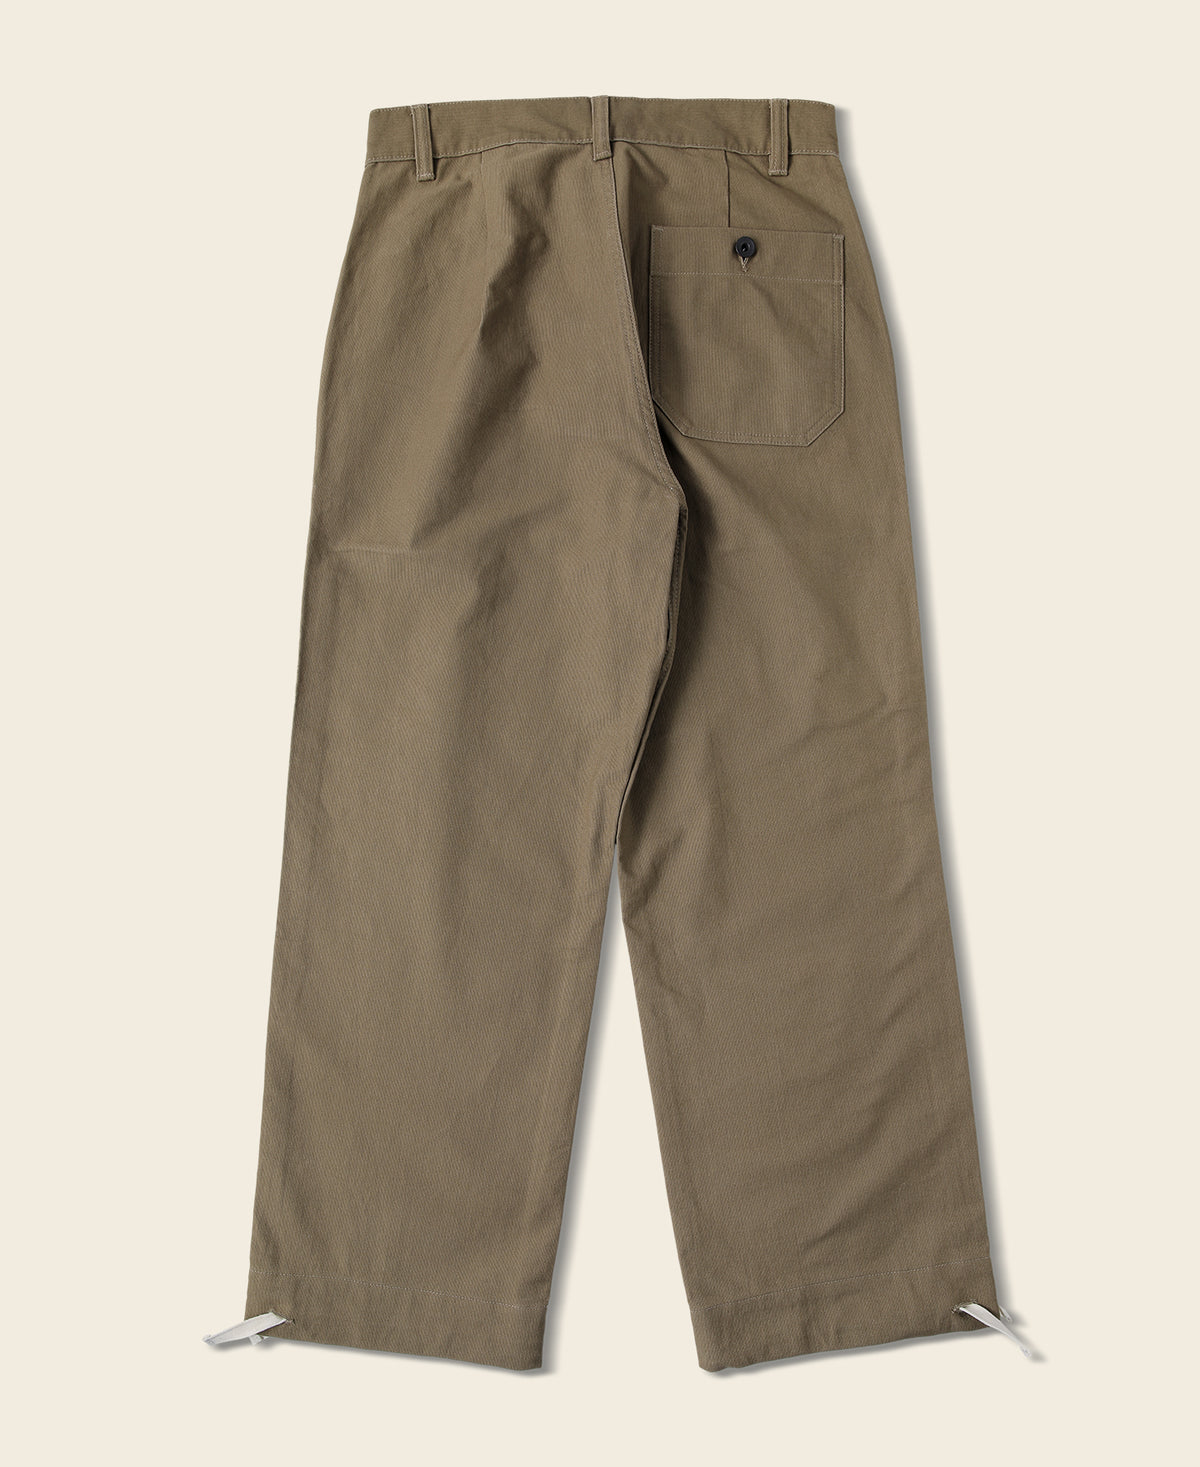 Experimental Test Sample Protective Cover Pants - Khaki